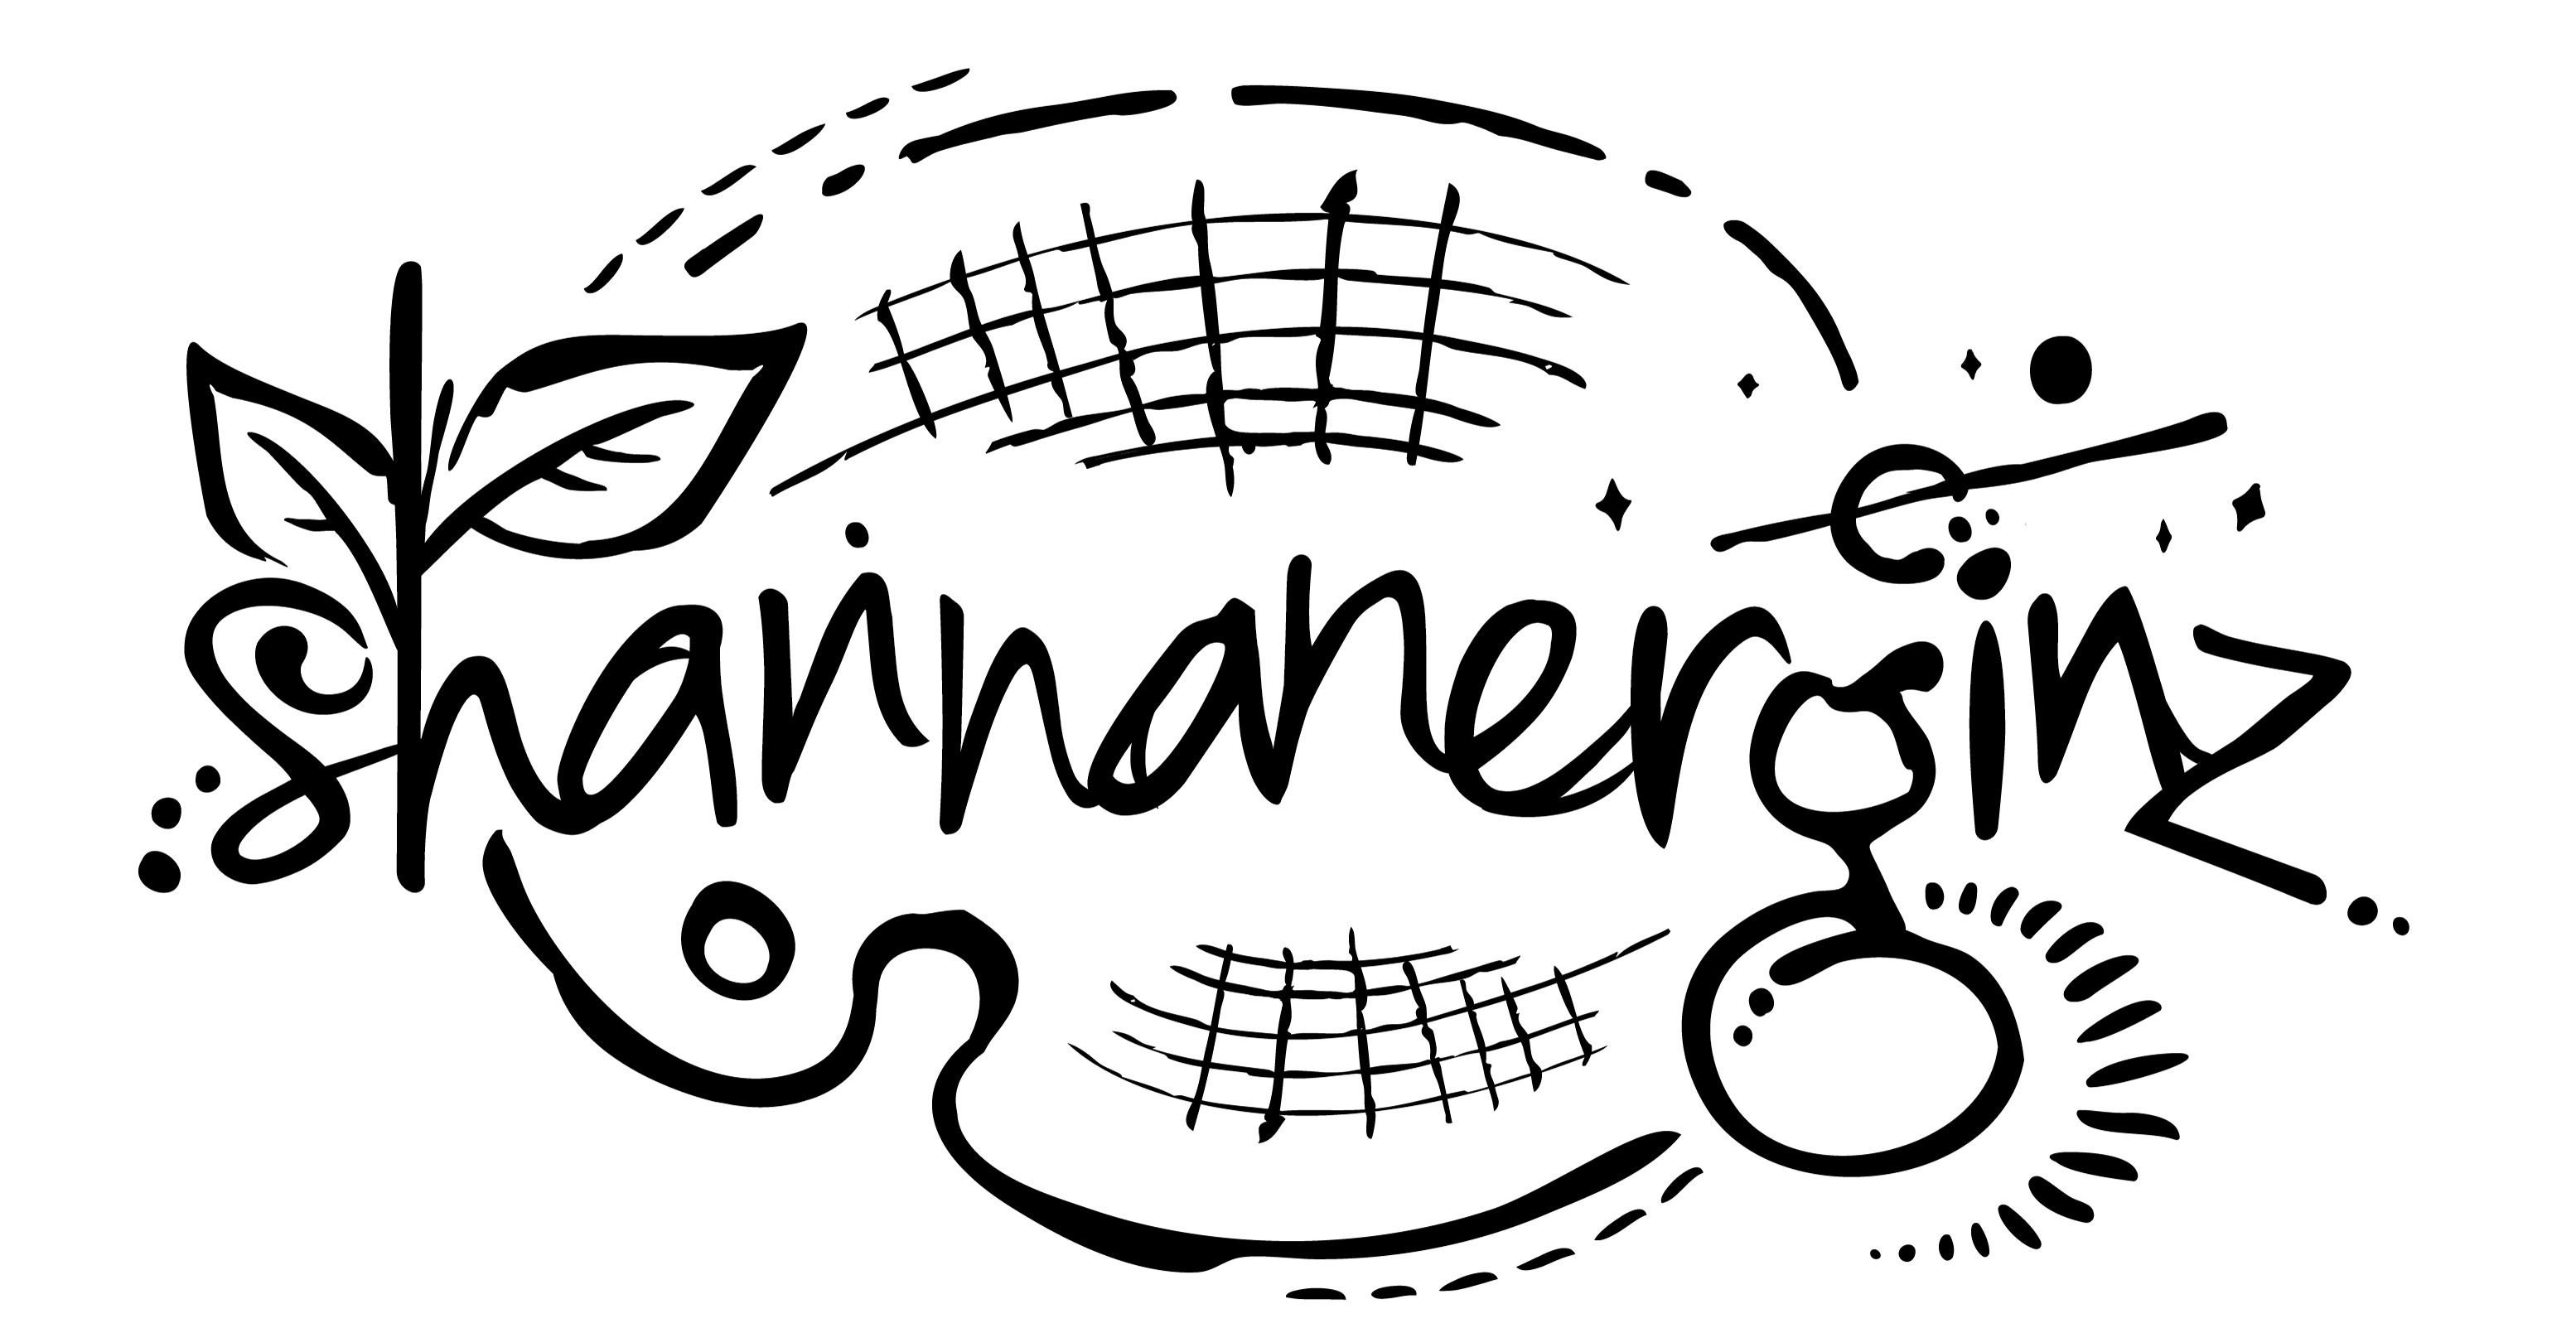 shannerginz logo